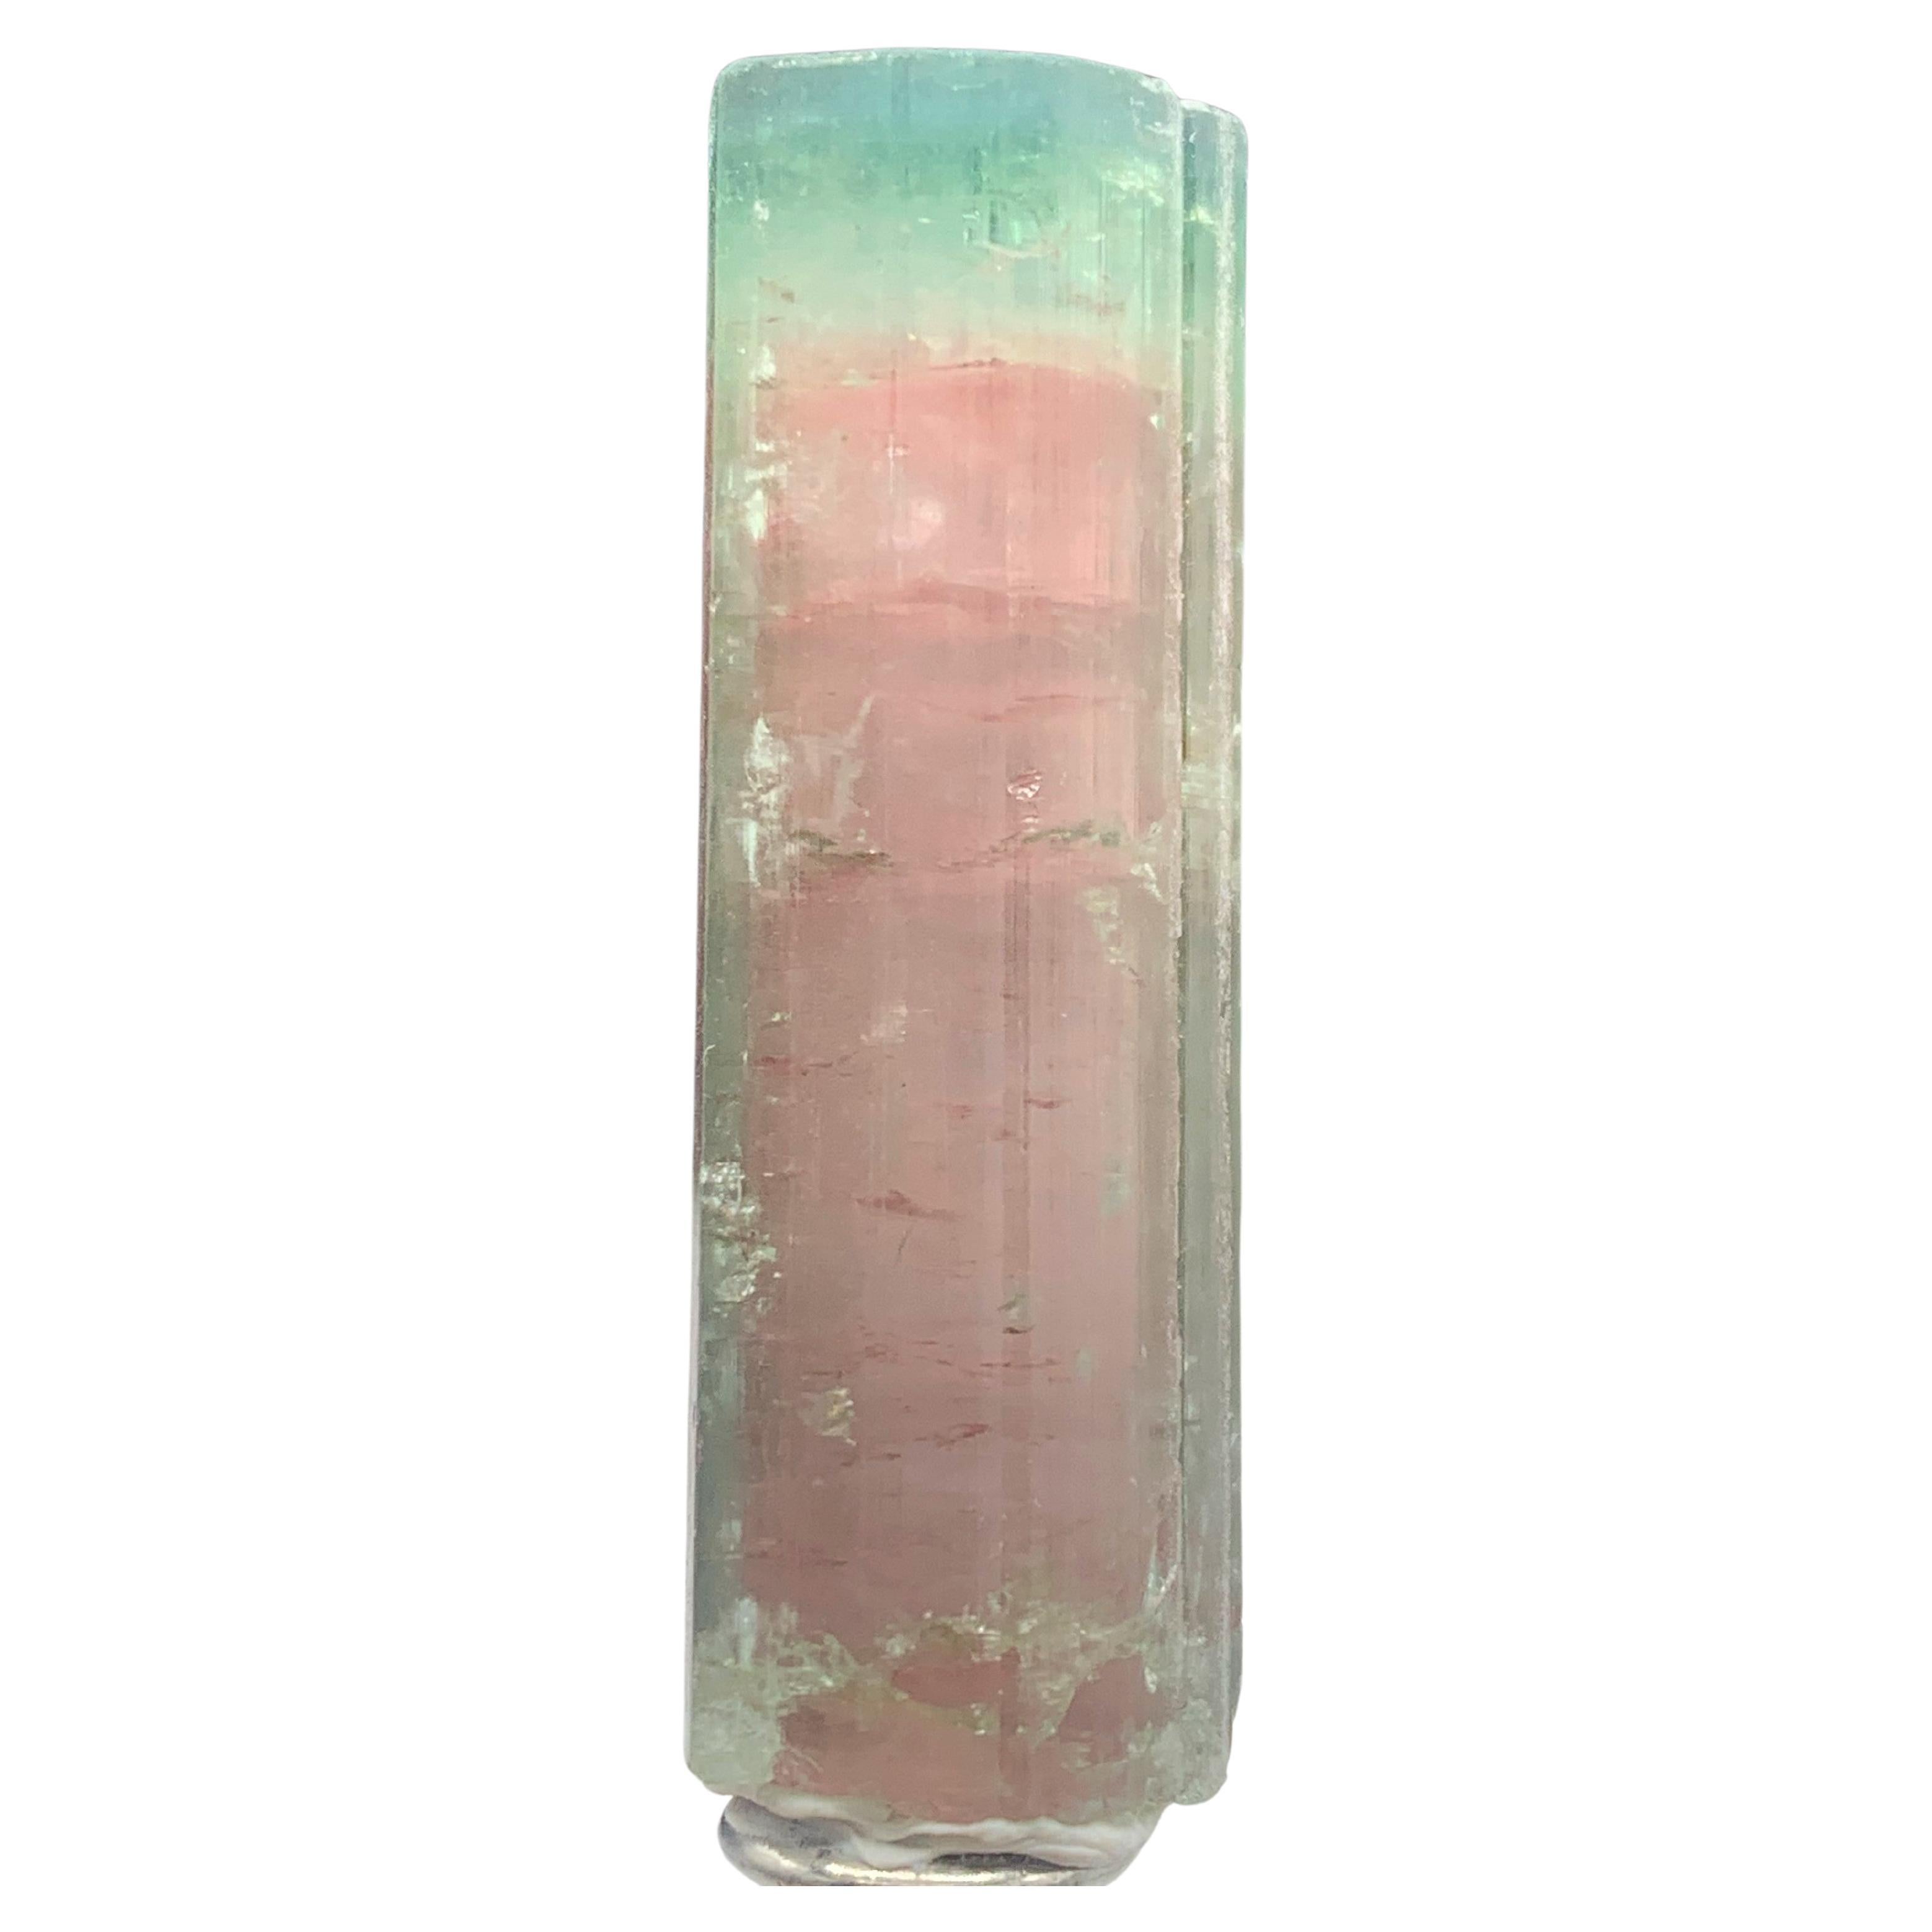 Carat Stunning Bi Color Tourmaline Crystal from Paprook, Afghanistan